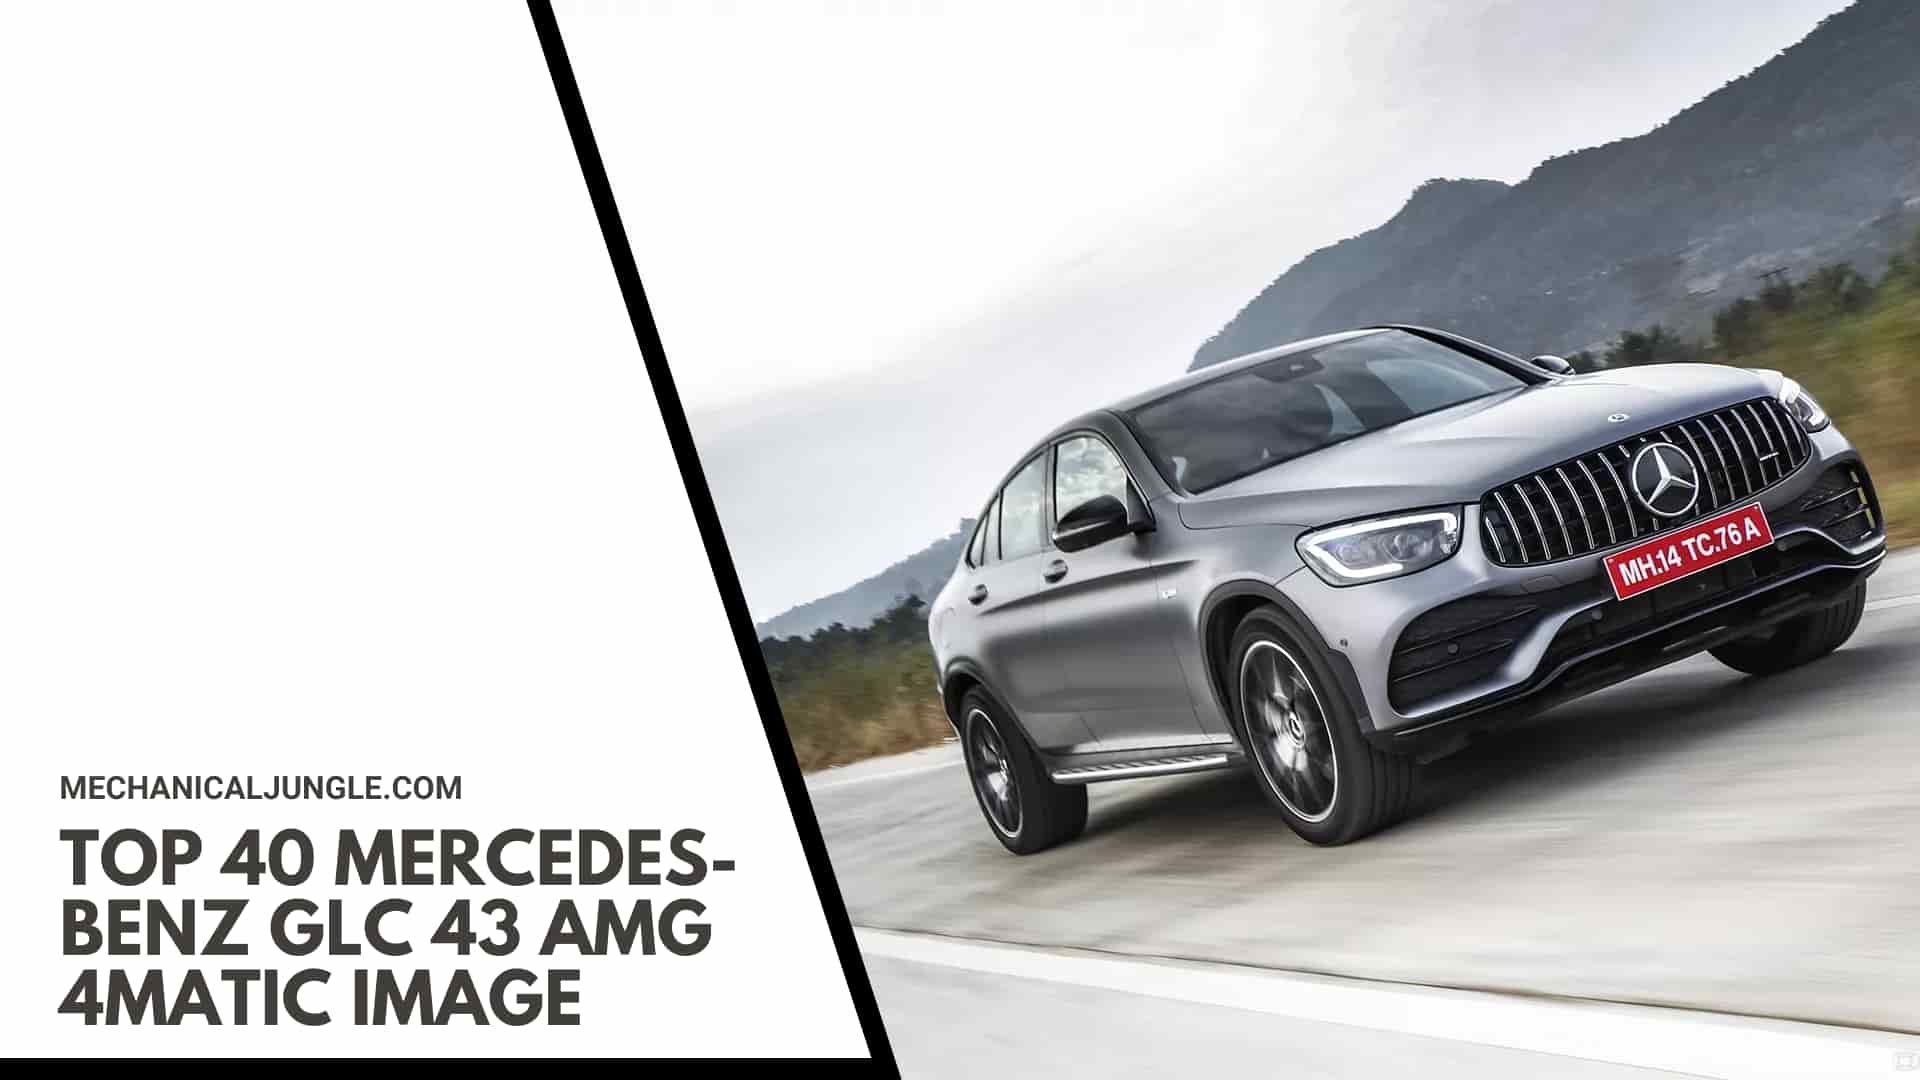 Top 40 Mercedes-Benz GLC 43 AMG 4MATIC Image